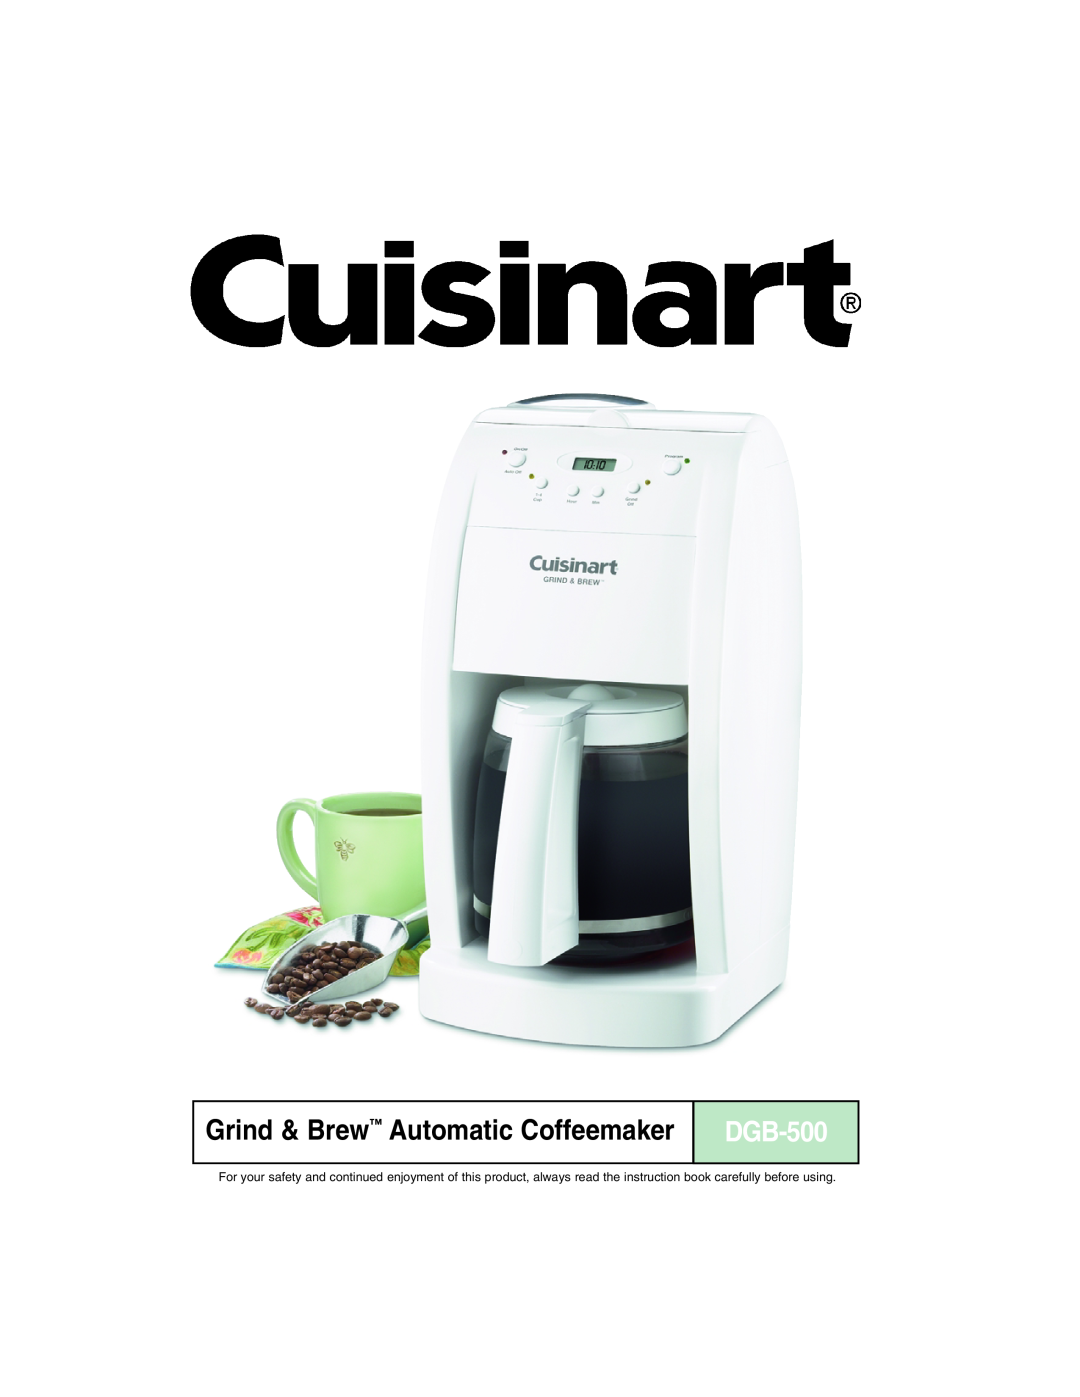 Cuisinart dgb500 manual Grind & Brew Automatic Coffeemaker, DGB-500 